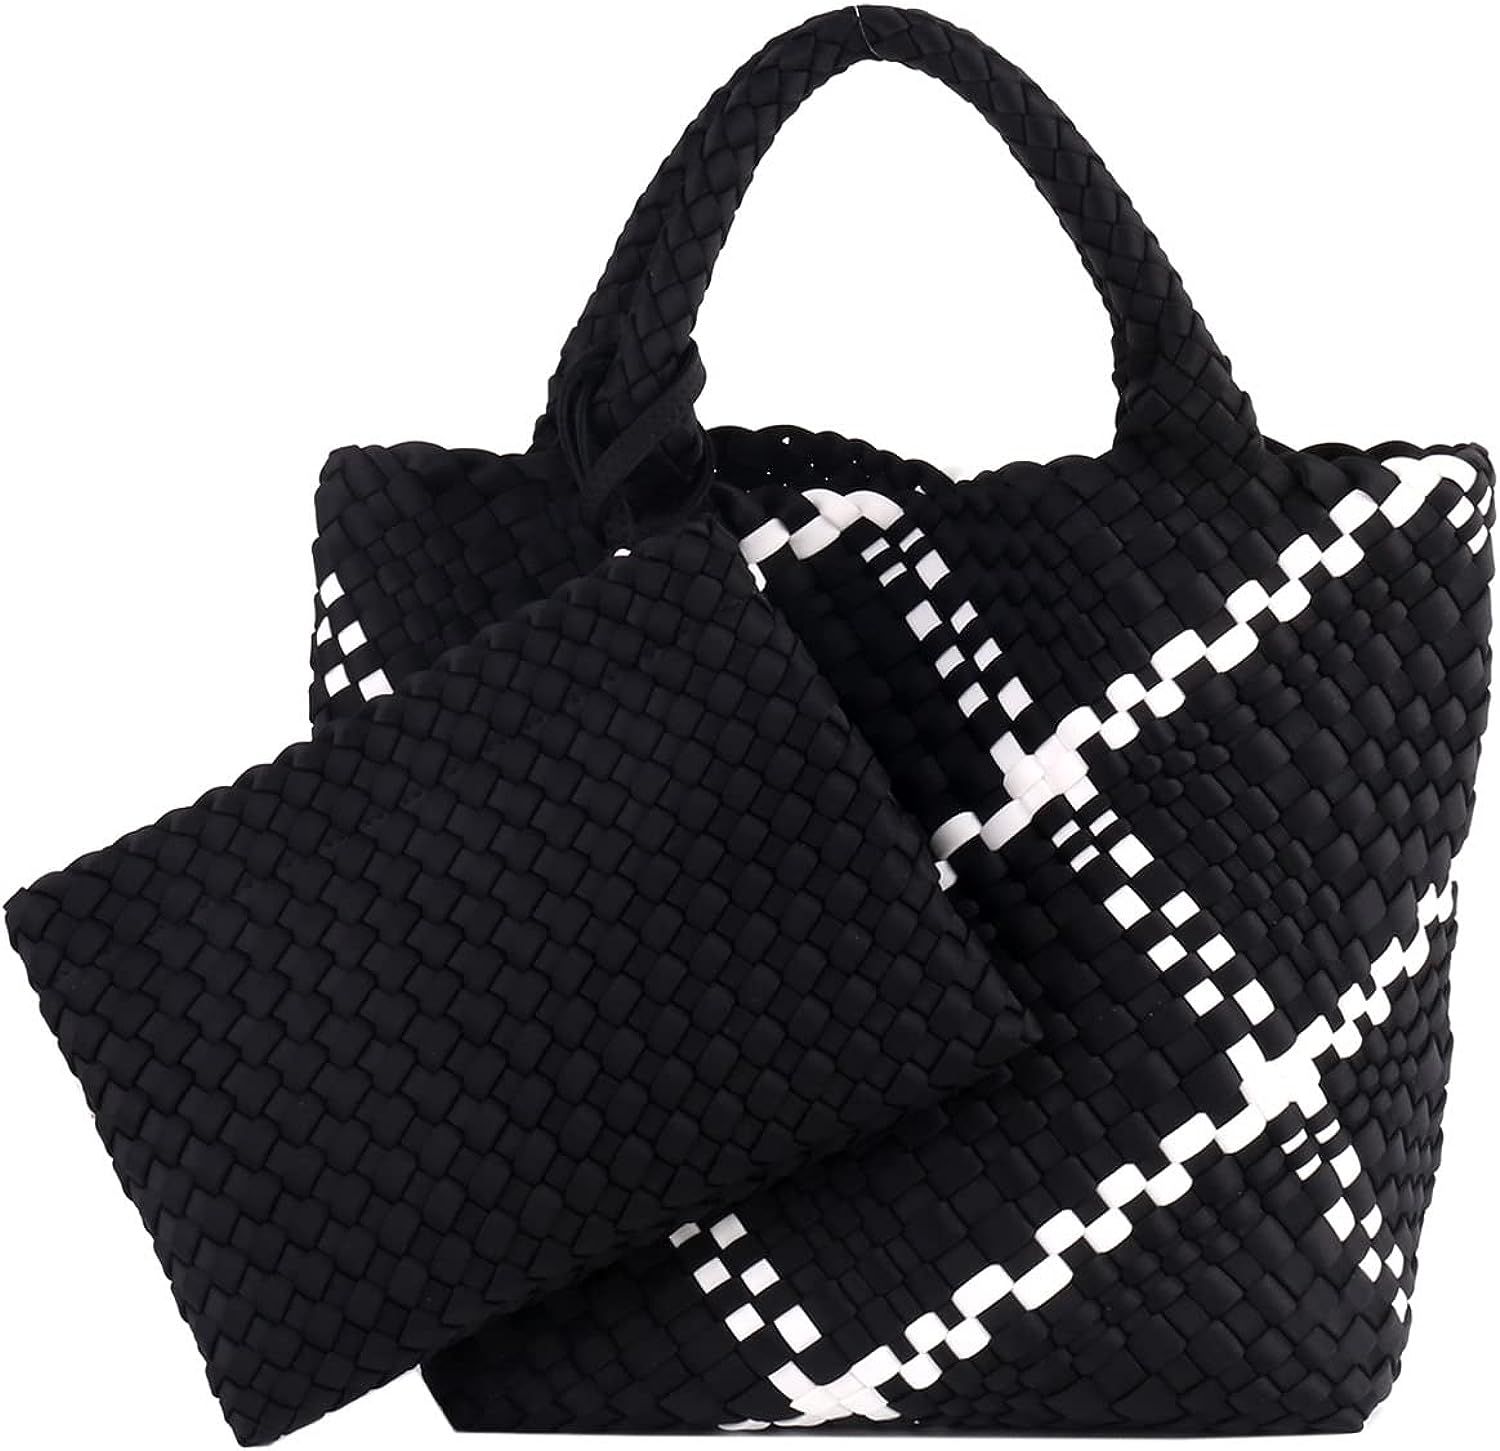 LMKIDS Woven Tote Bag + Purse Women Neoprene Tote Handbag Fashion Large Shoulder Top-Handle Travel B | Amazon (US)